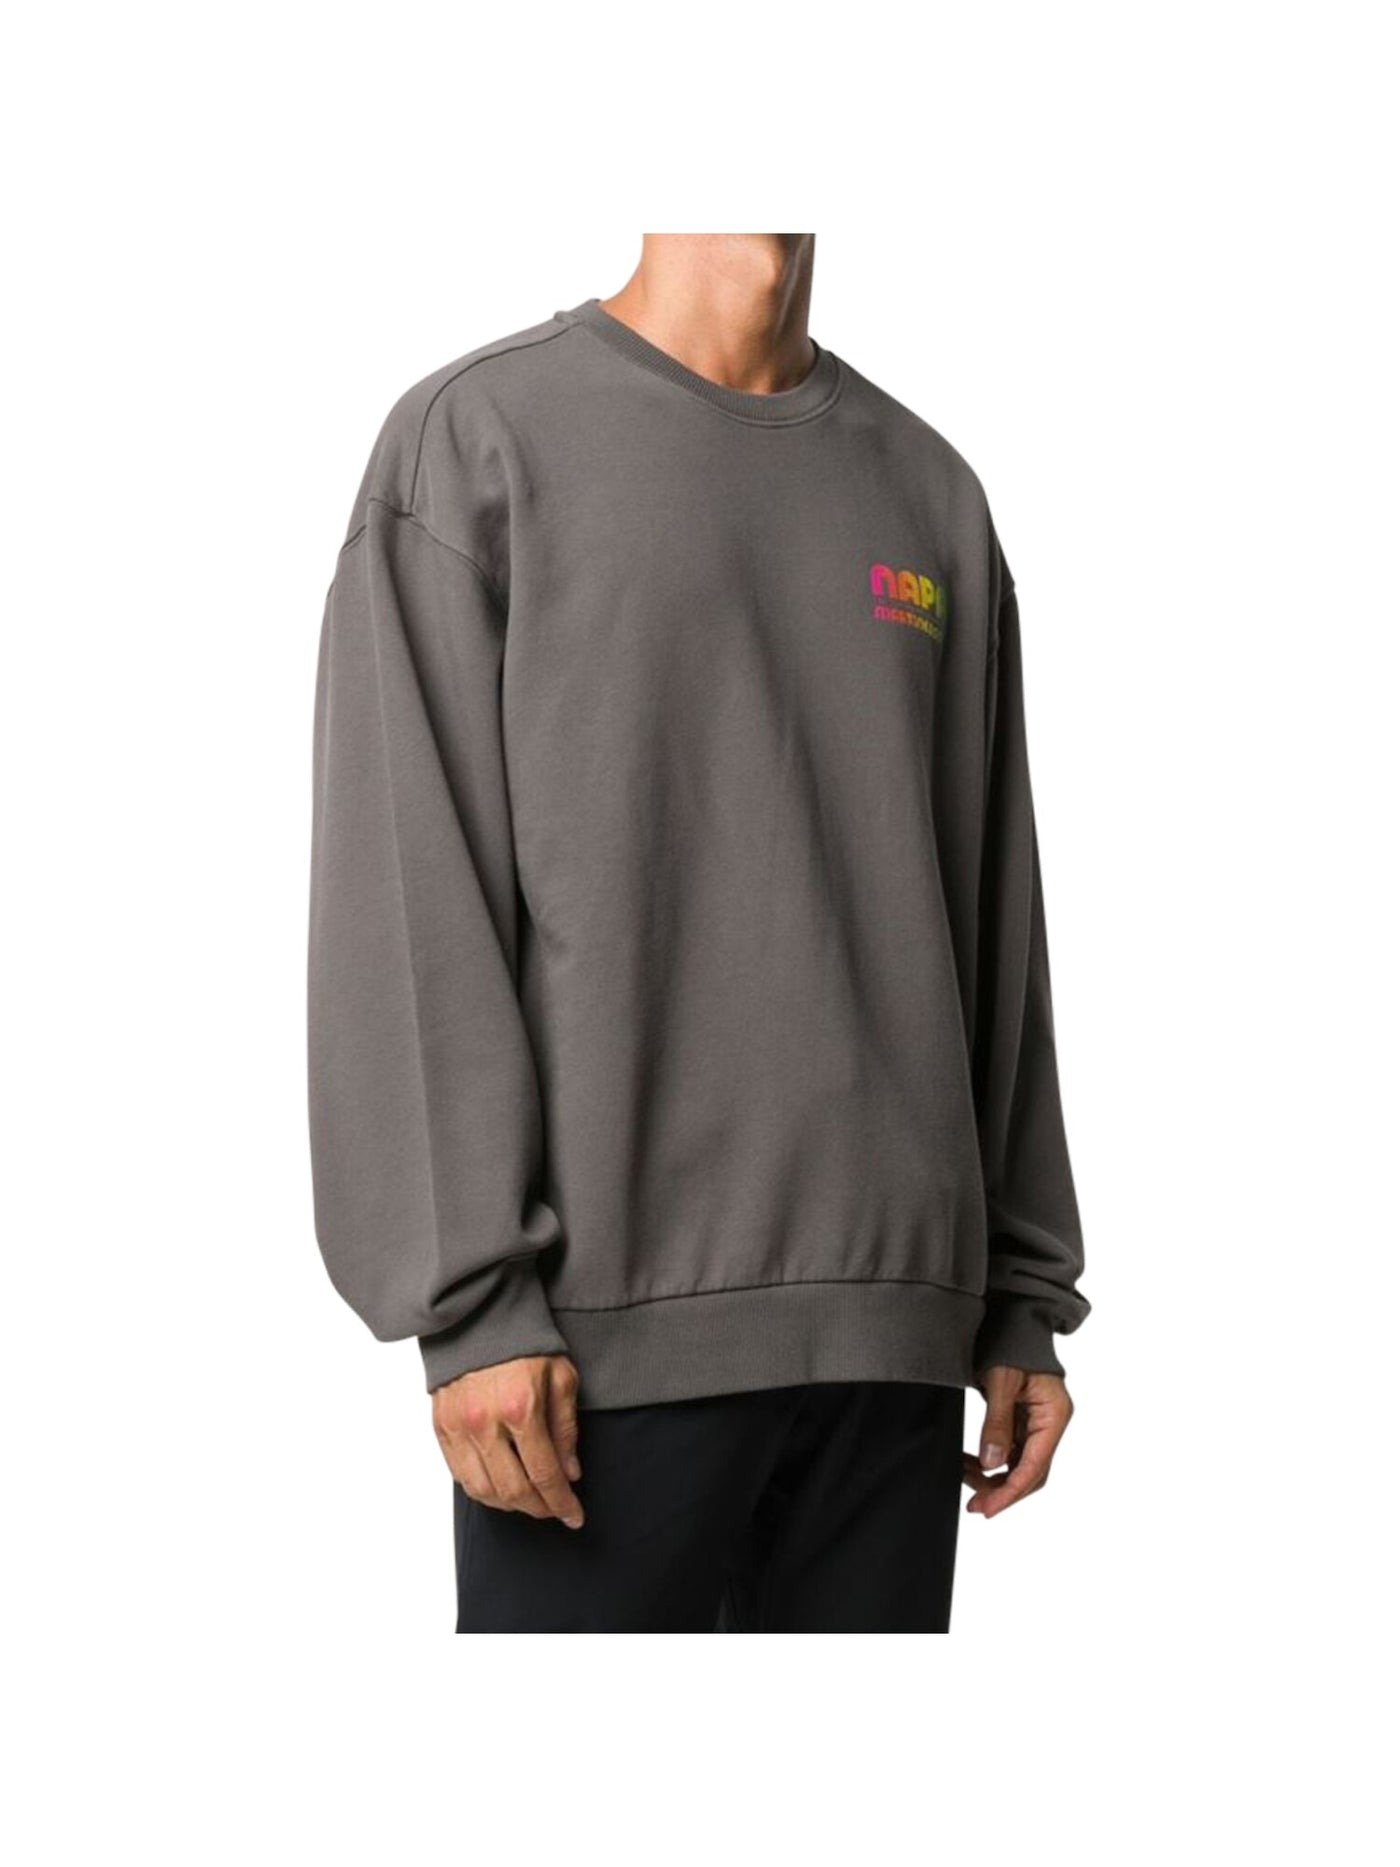 NAPA IJRI Mens Gray Printed Long Sleeve Crew Neck Classic Fit Sweatshirt M